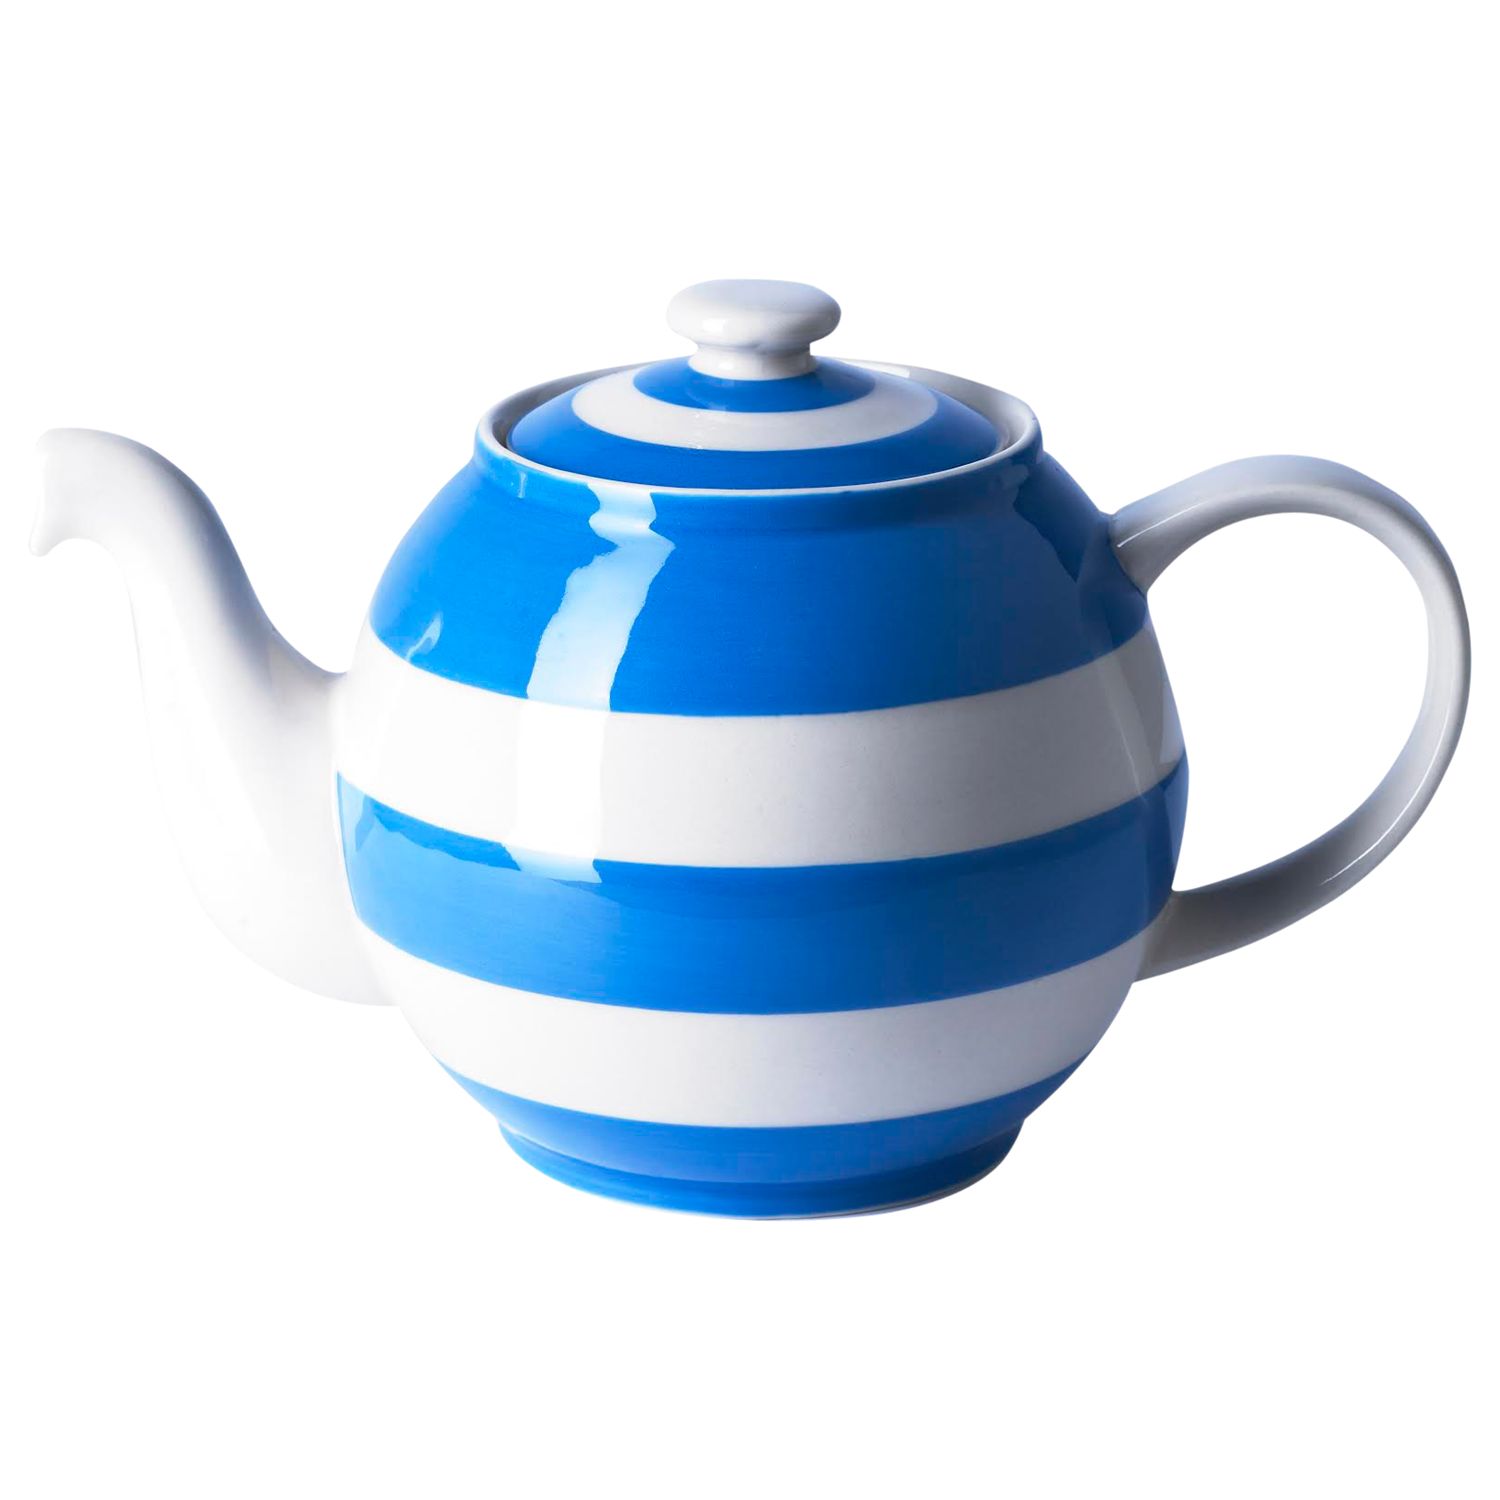 Cornishware Betty Teapot, Small, Blue/White, 500ml